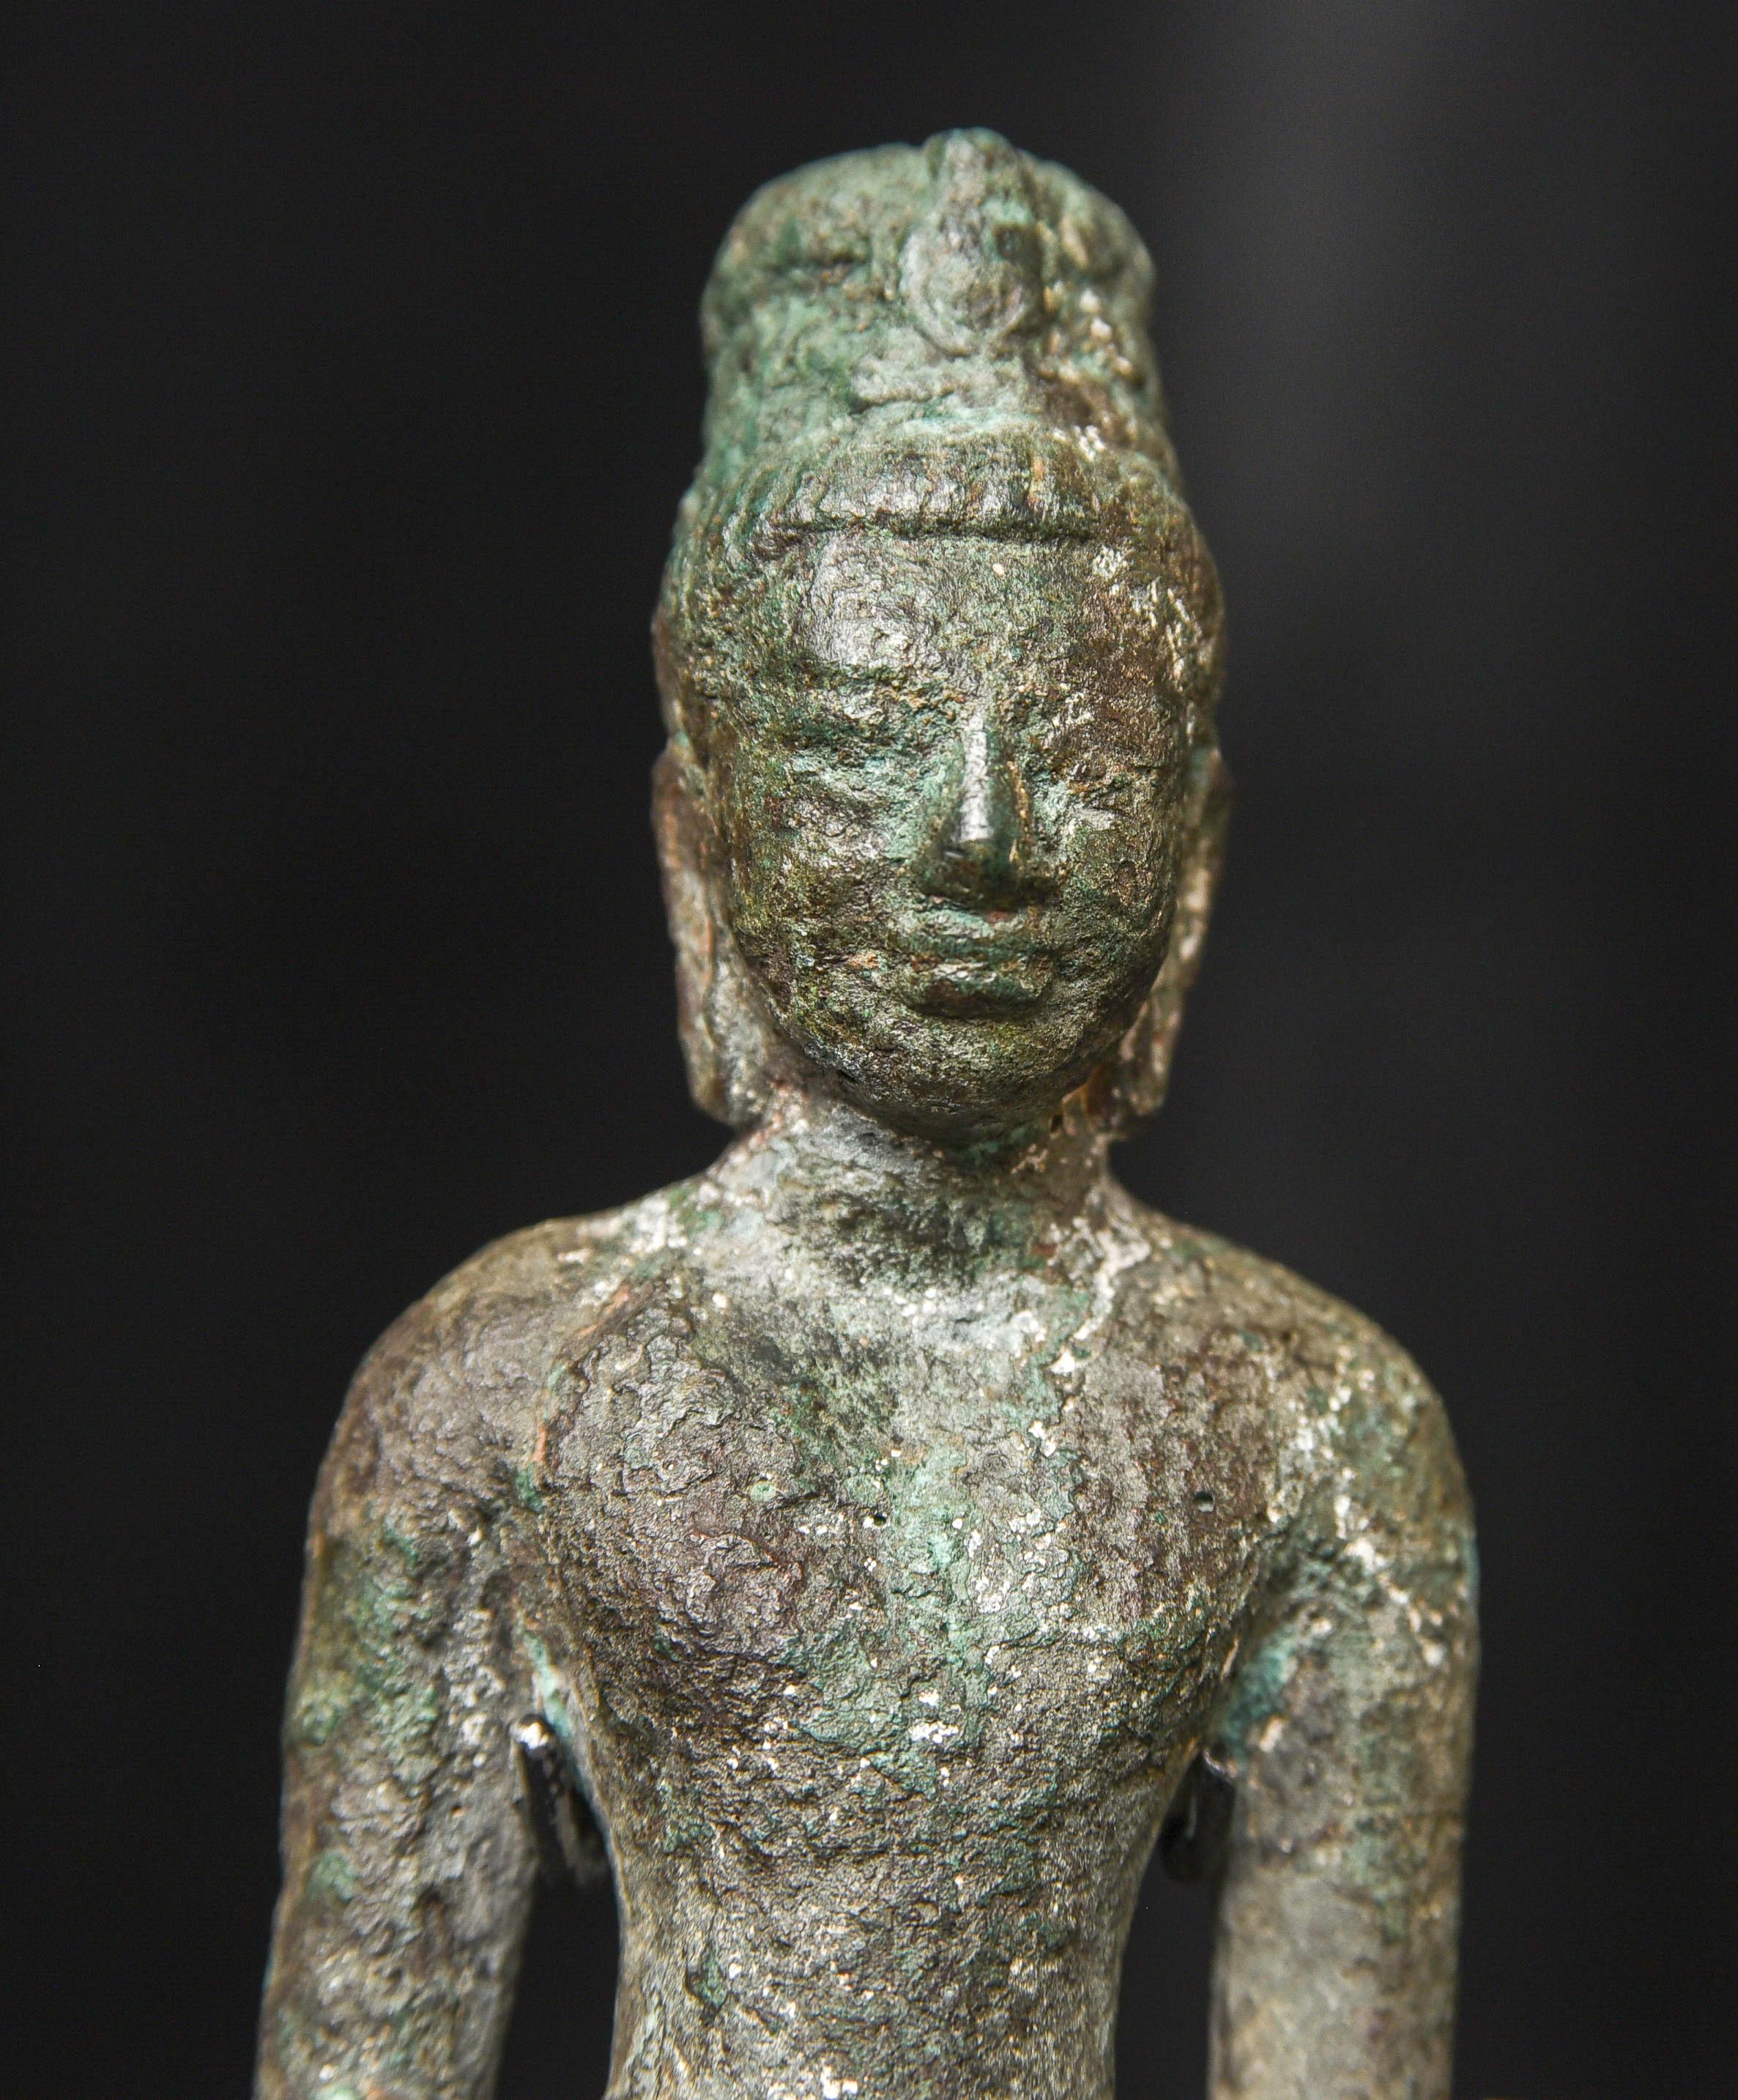 7th/9thC Solid-Cast Bronze Prakhon Chai Buddha or Bodhisattva - 9688 For Sale 11